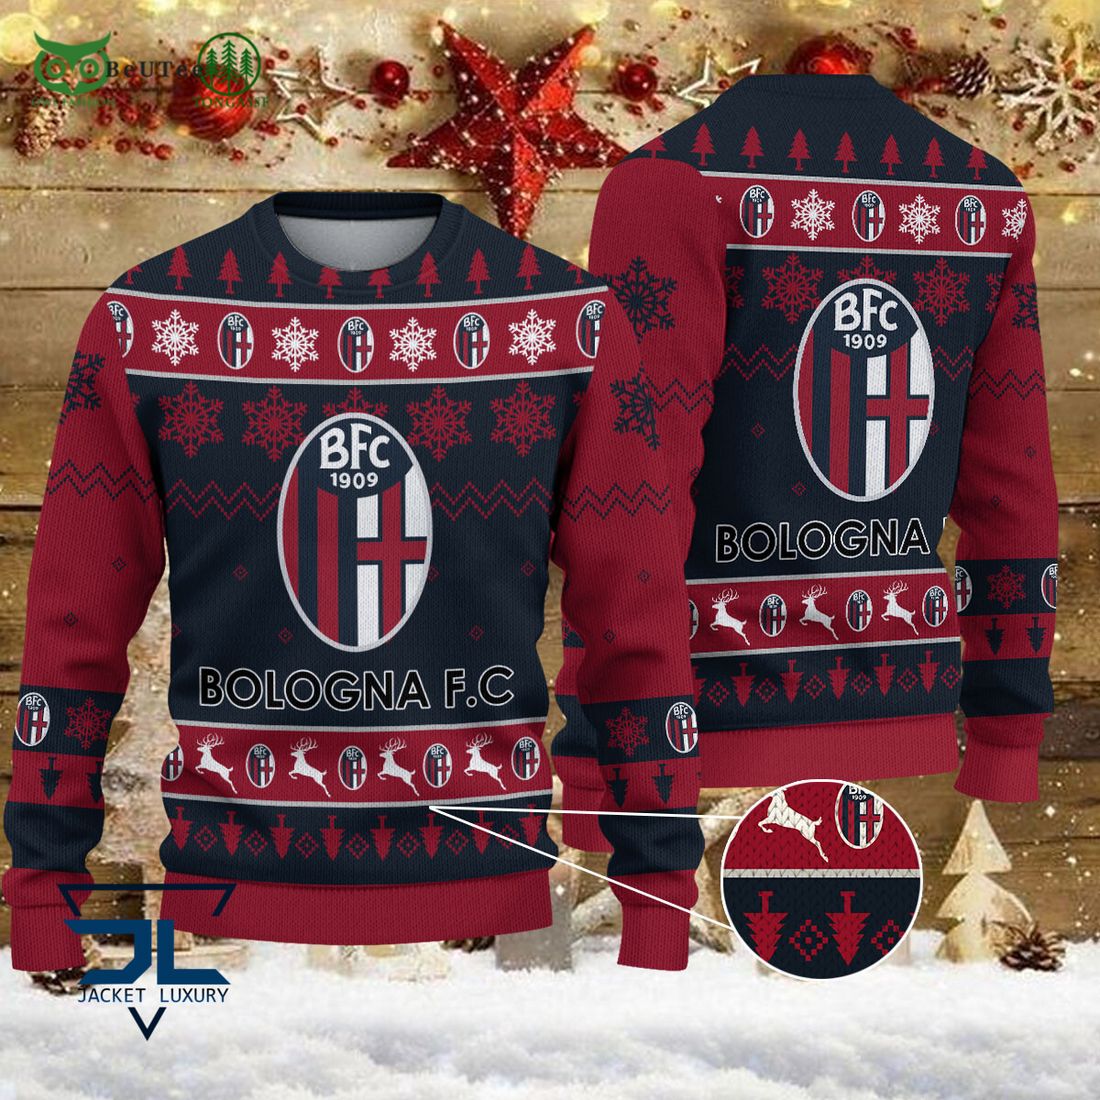 Bologna Fc 1909 Team Football Lega Serie A Ugly Sweater - Owl Fashion Shop